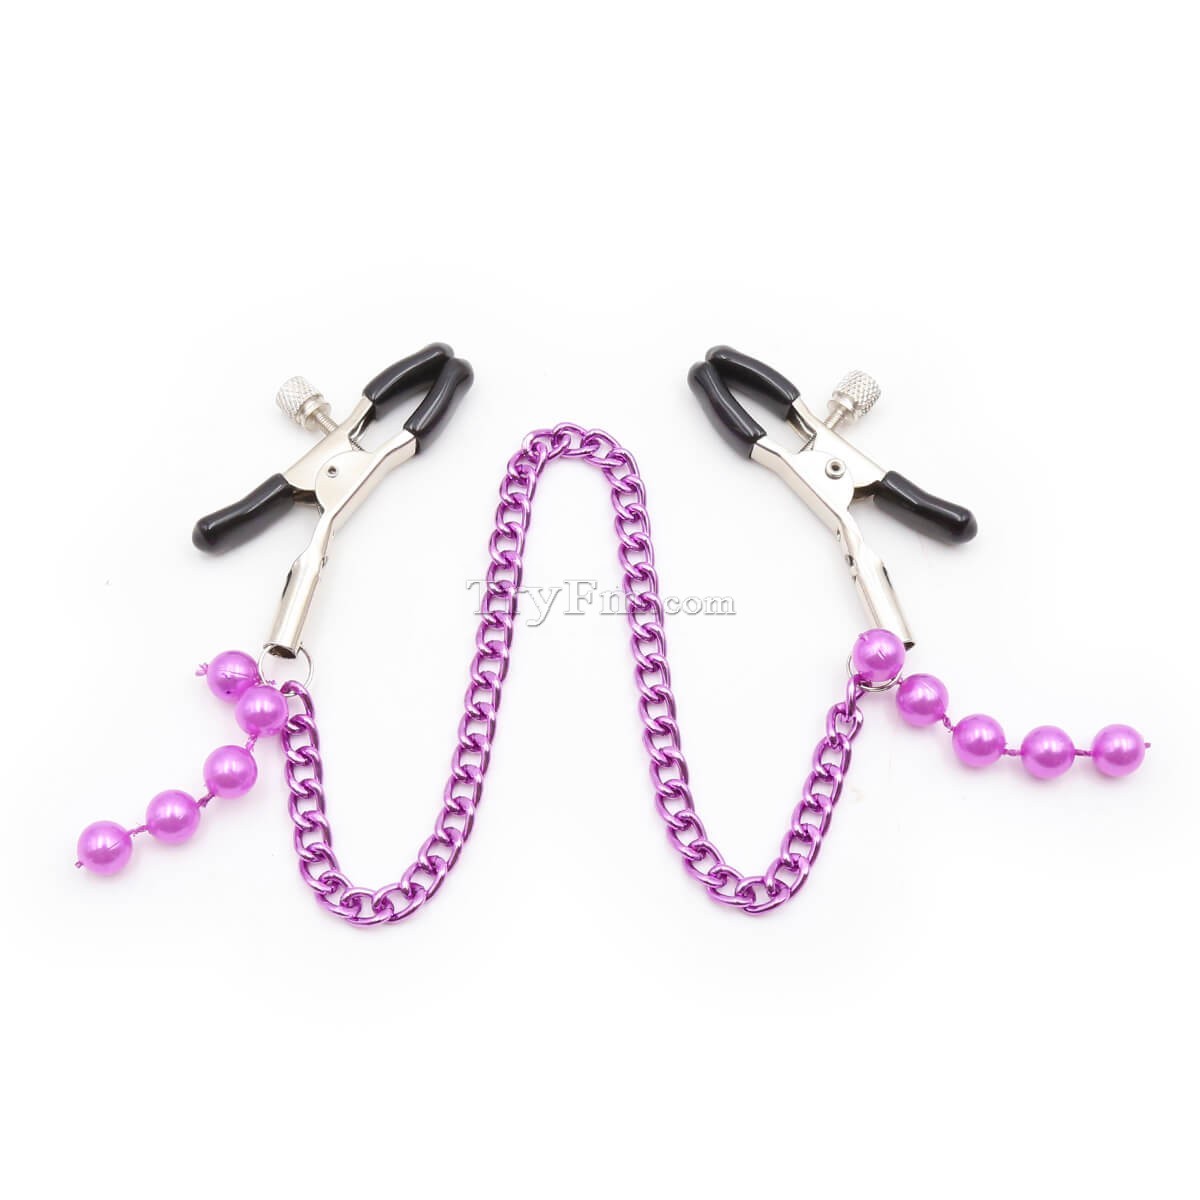 2-purple-chain-nipple-clamp5.jpg